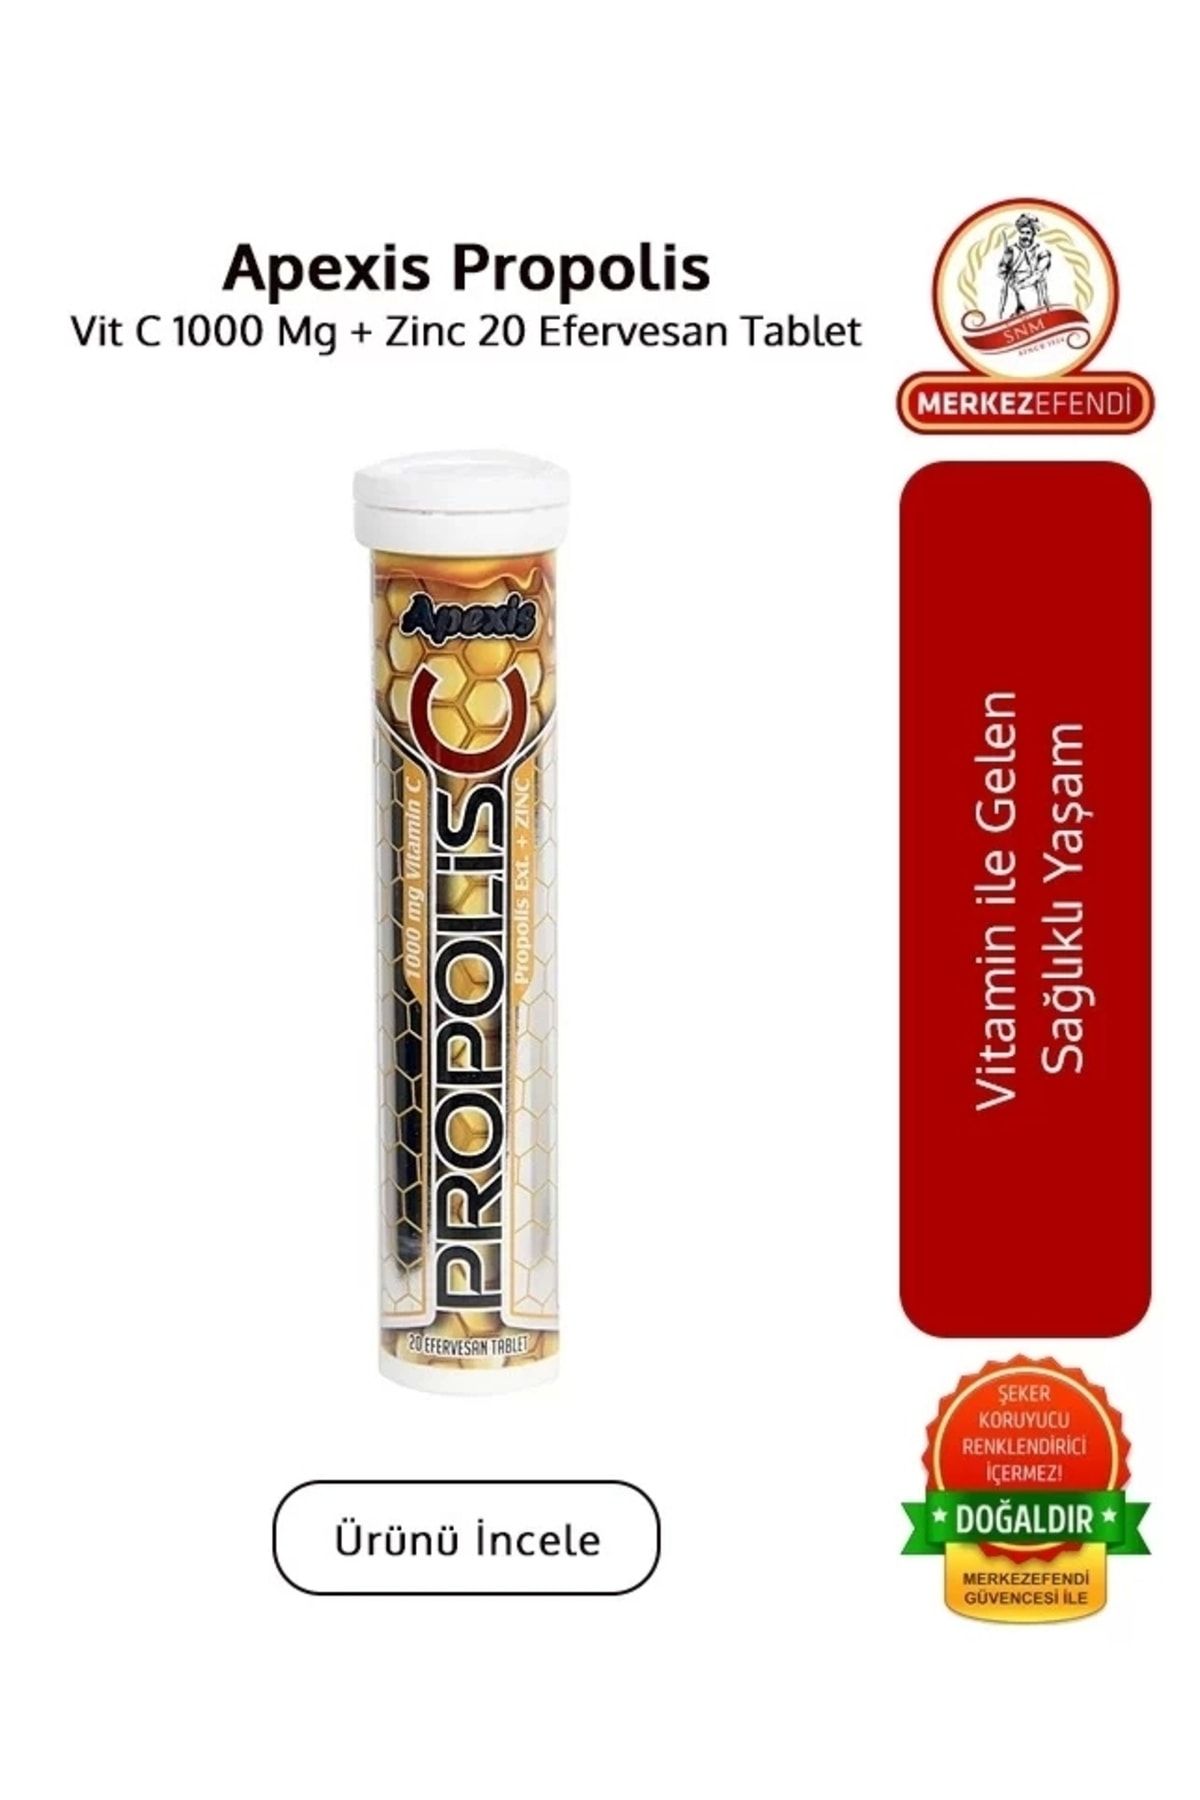 Apexis Propolis Vit C 1000 Mg + Zinc 20 Efervesan Tablet